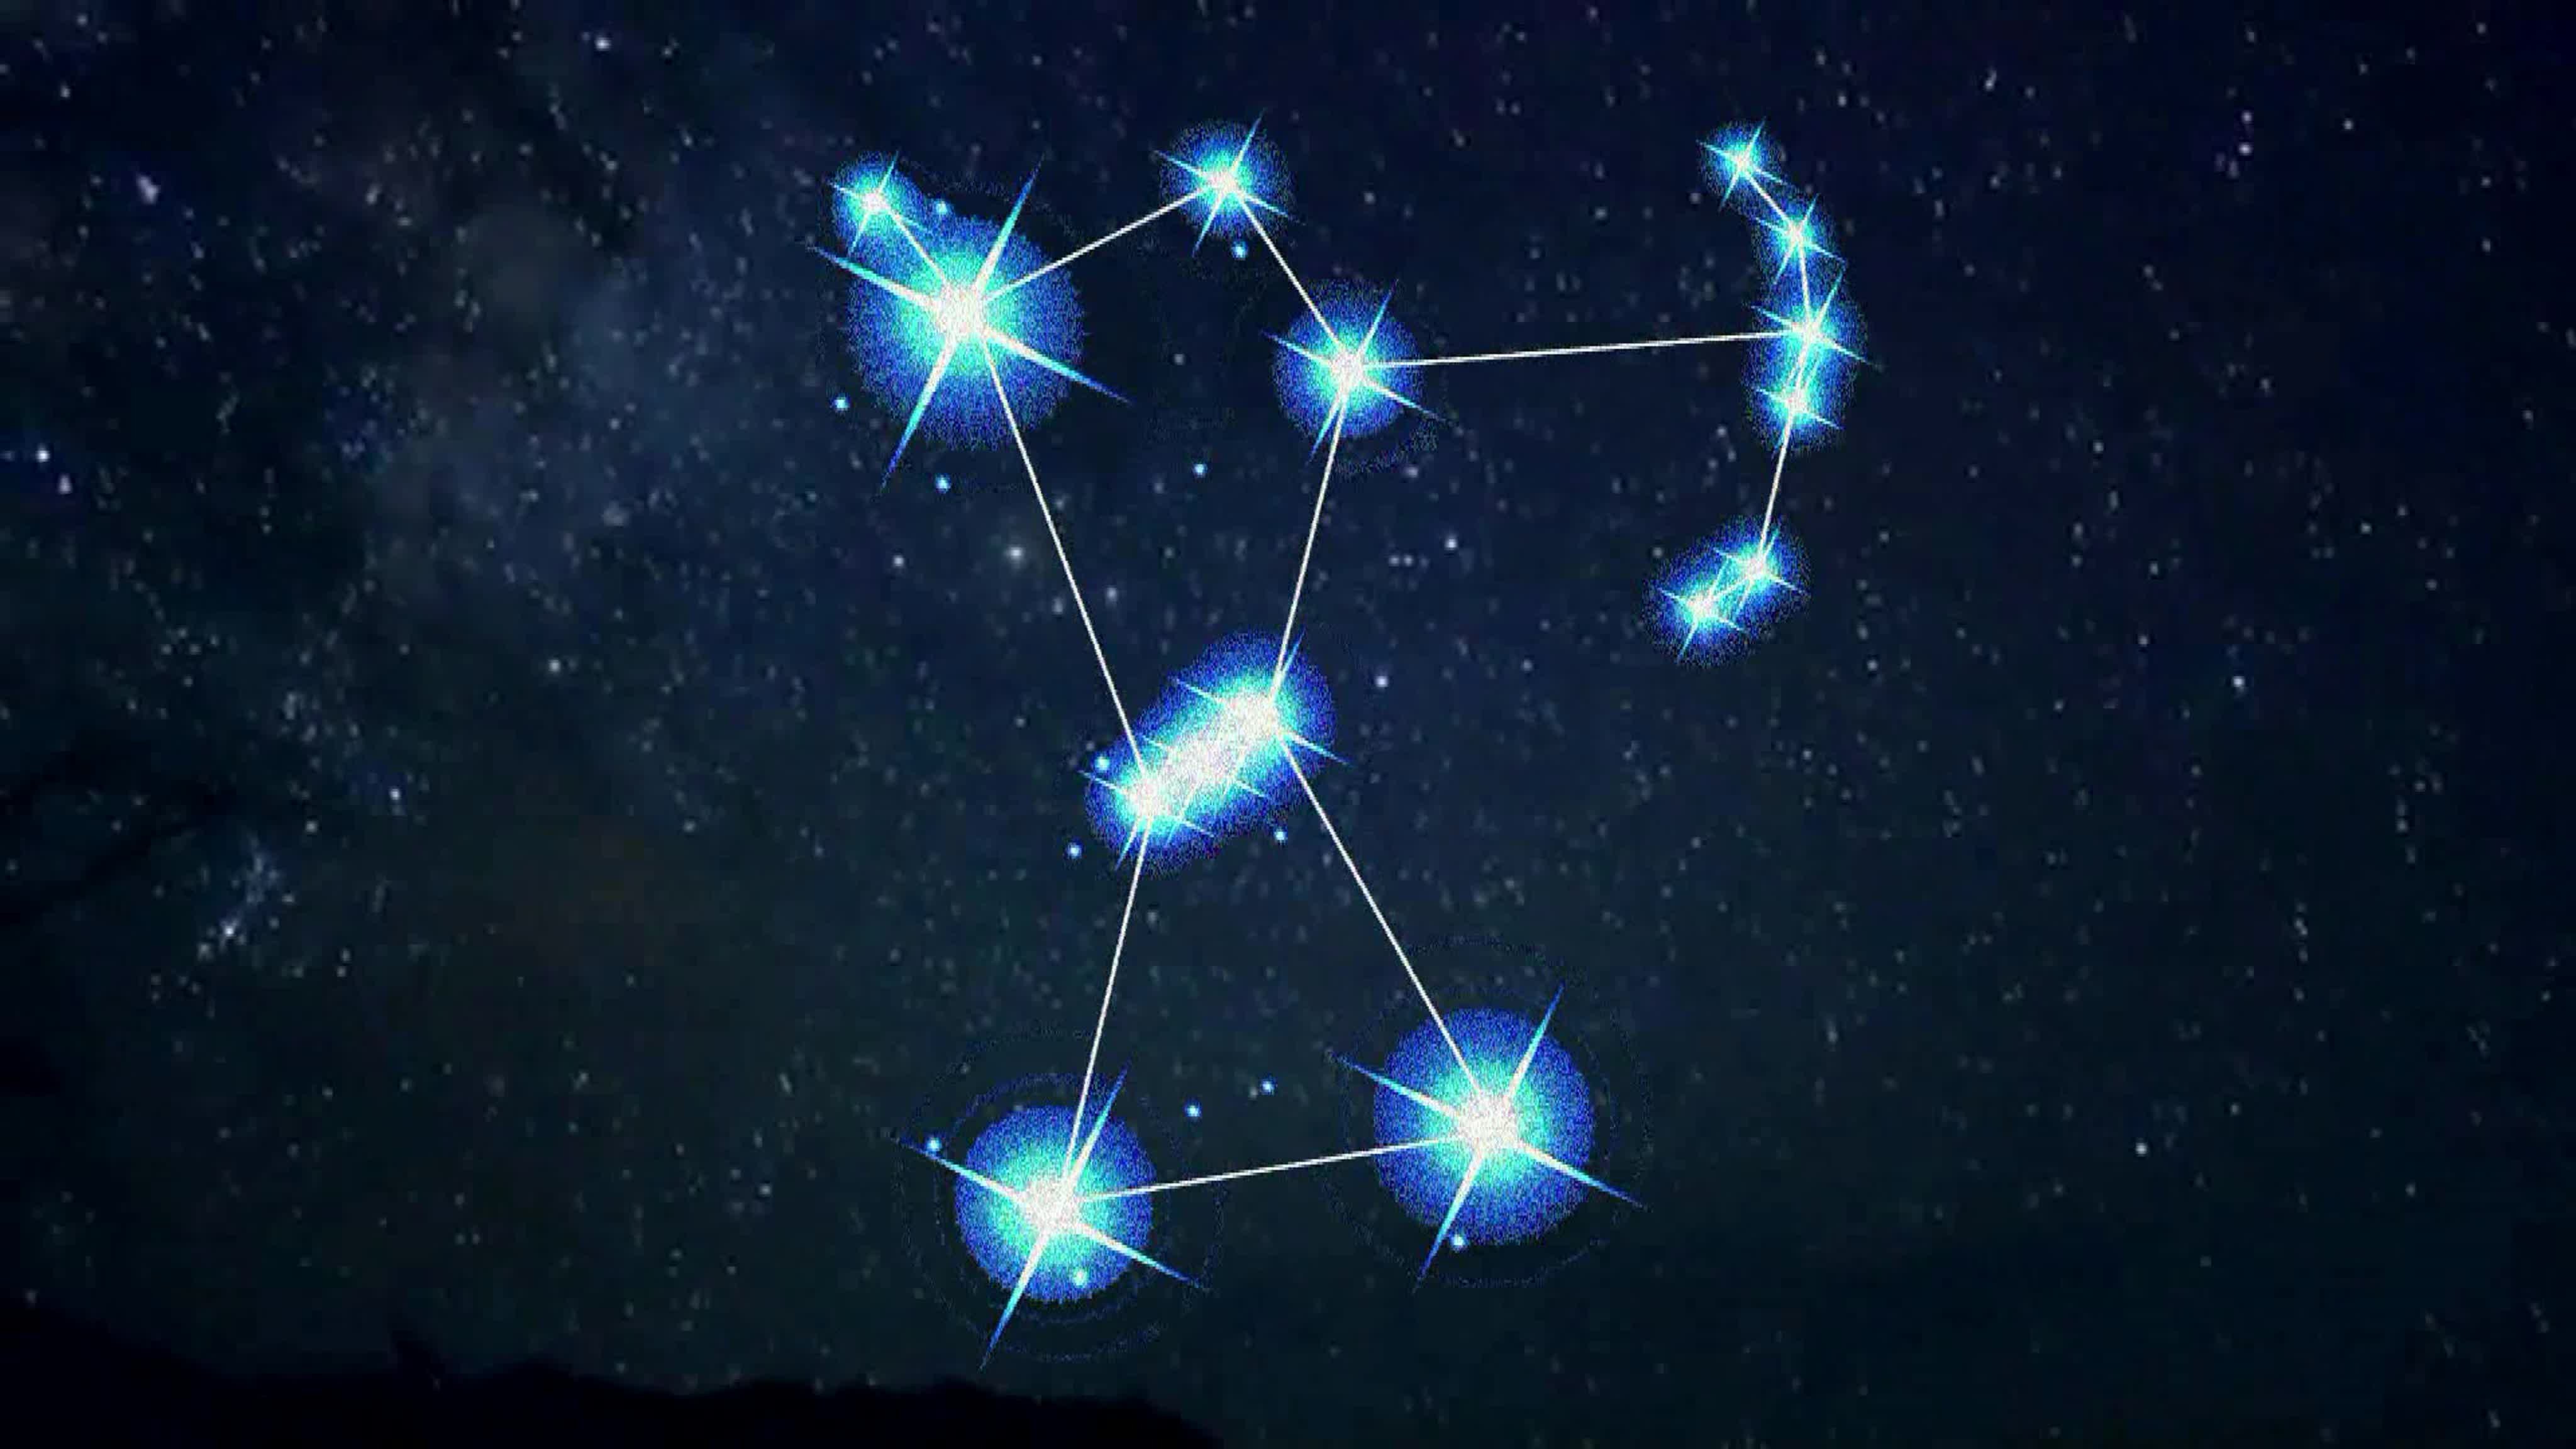 Сценарий созвездие. Созвездие Орион созвездия. Созвездие Ориона и Плеяды. Созвездие Орион схема. Астеризм сноп Созвездие Ориона.